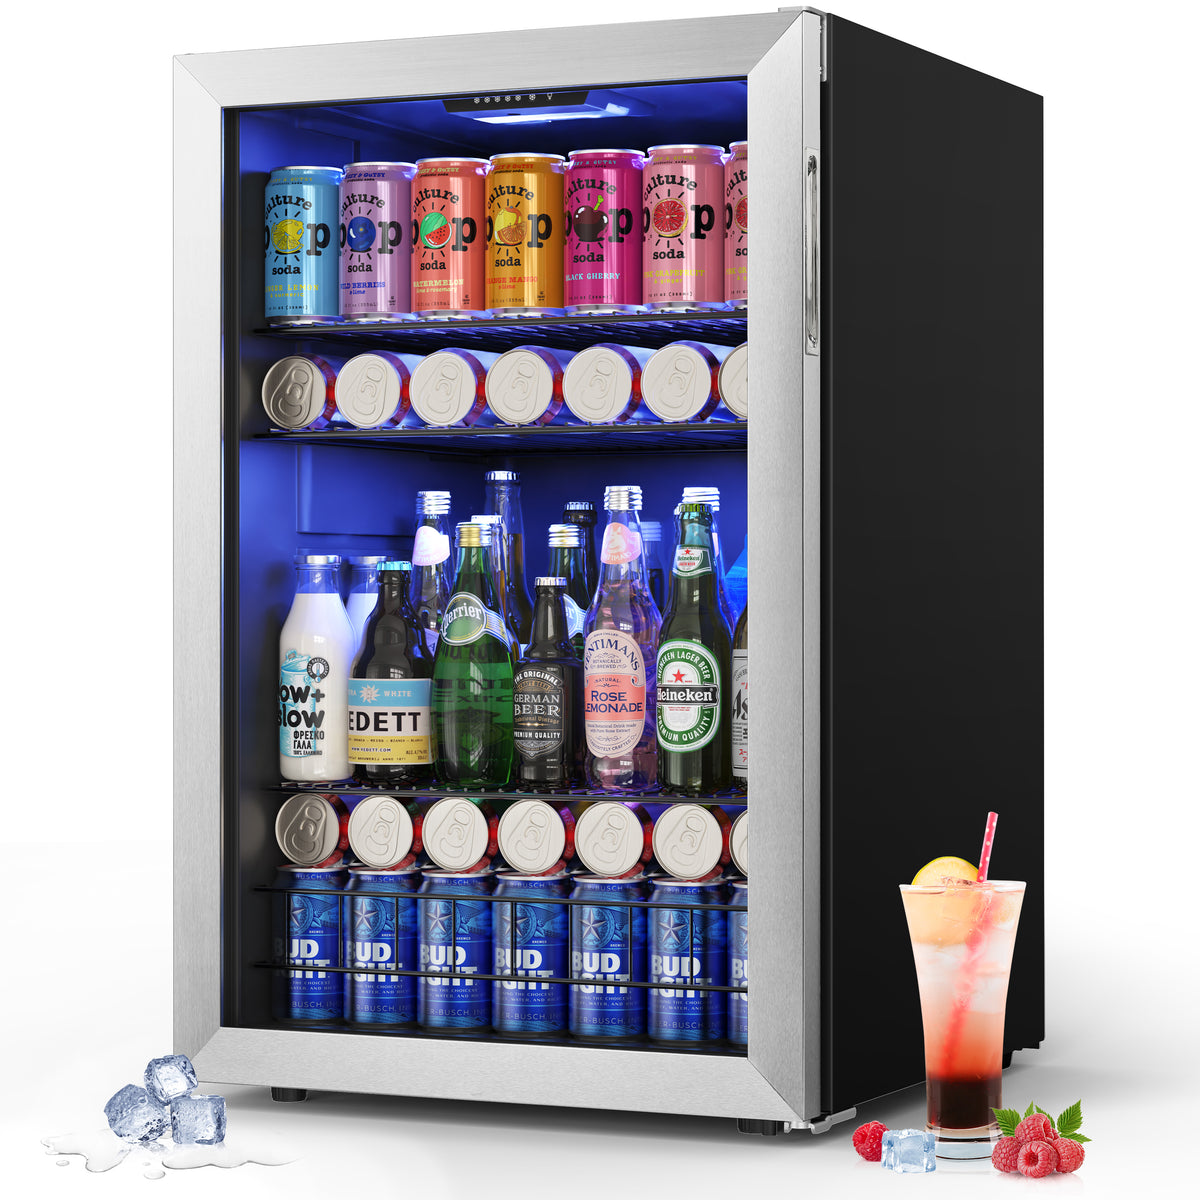 Yeego 21 Inch Wide 180 Cans Beverage Fridge, Drink Cooler Under Counter, Built-In Or Freestanding